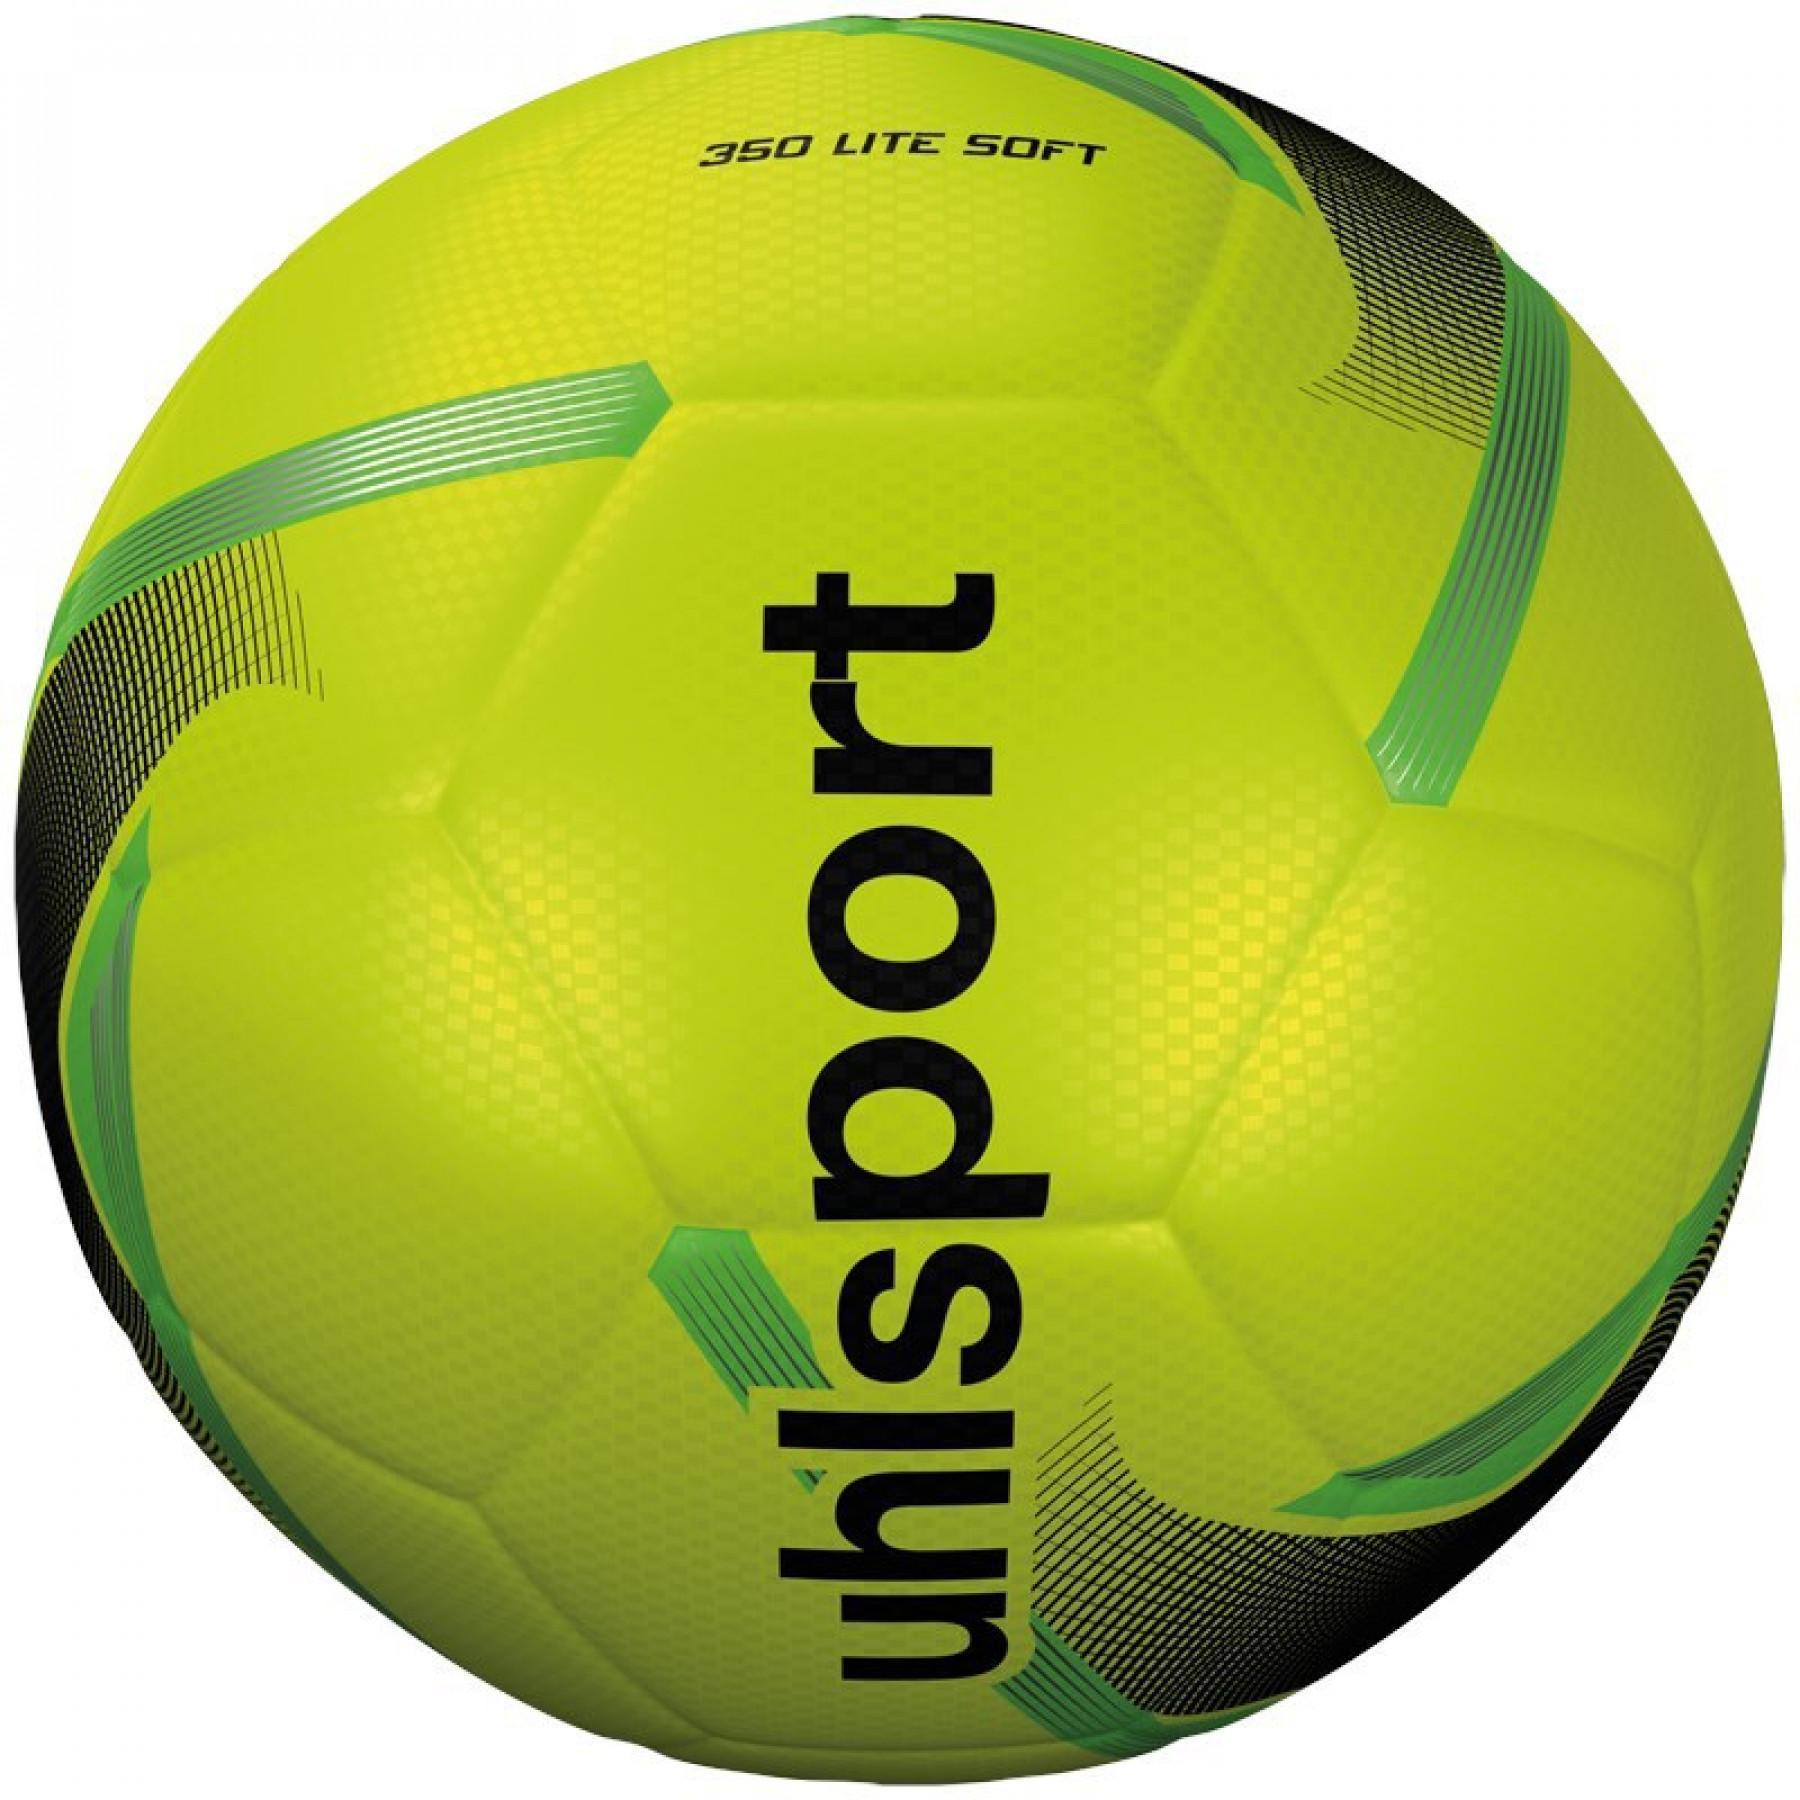 Palla per bambini Uhlsport 350 Lite Soft